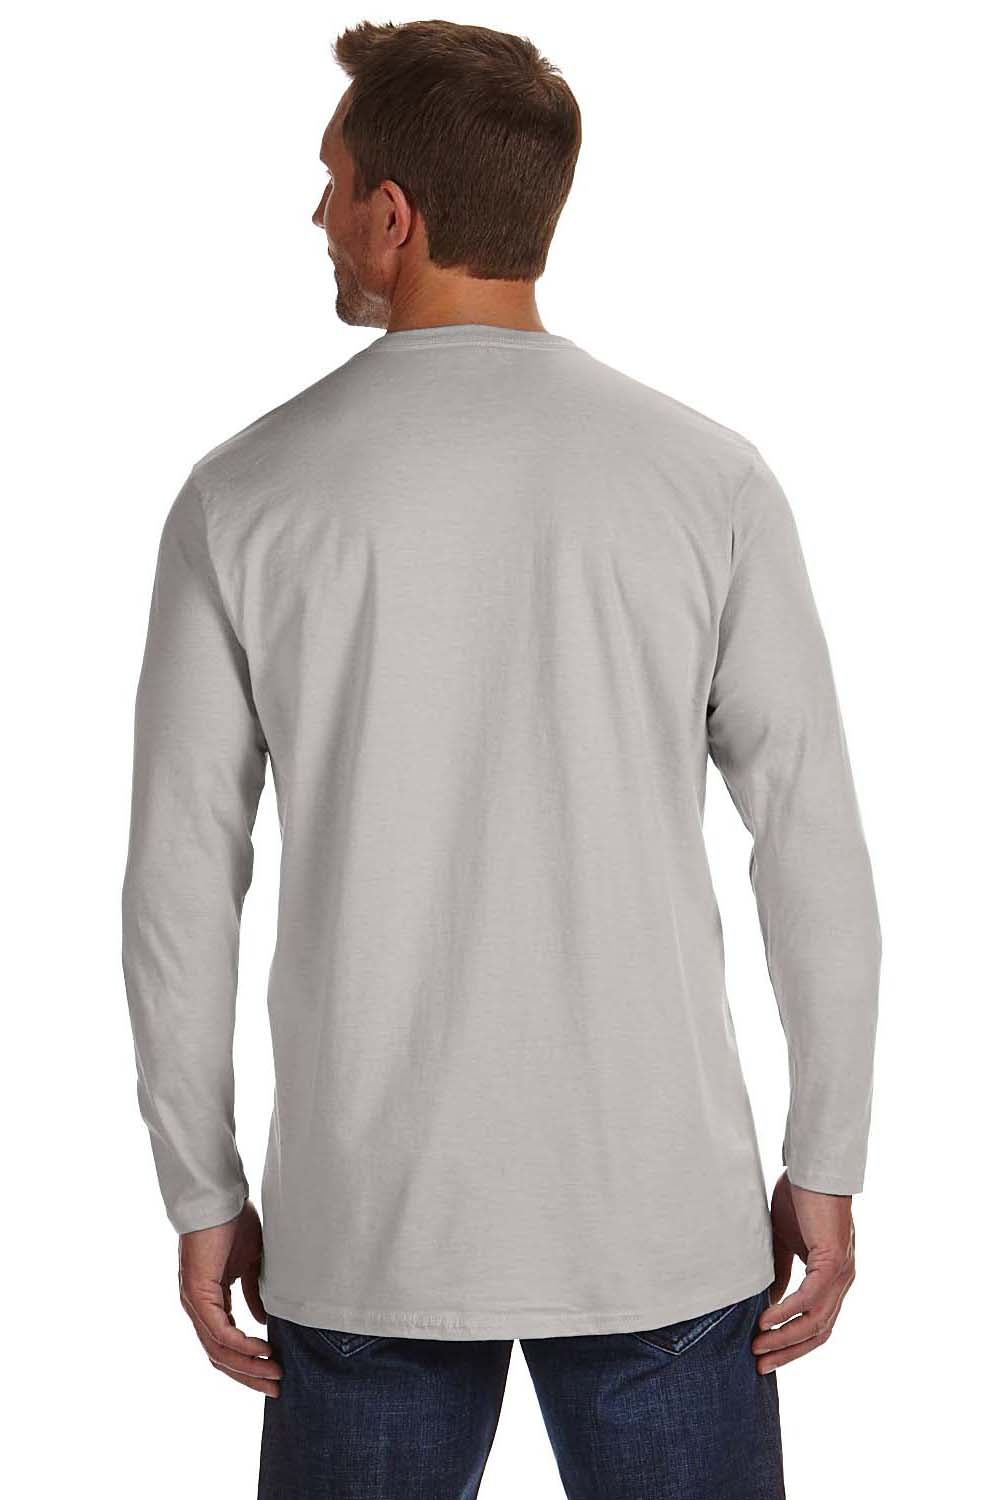 Hanes 498L Mens Nano-T Long Sleeve Crewneck T-Shirt Light Steel Grey Back